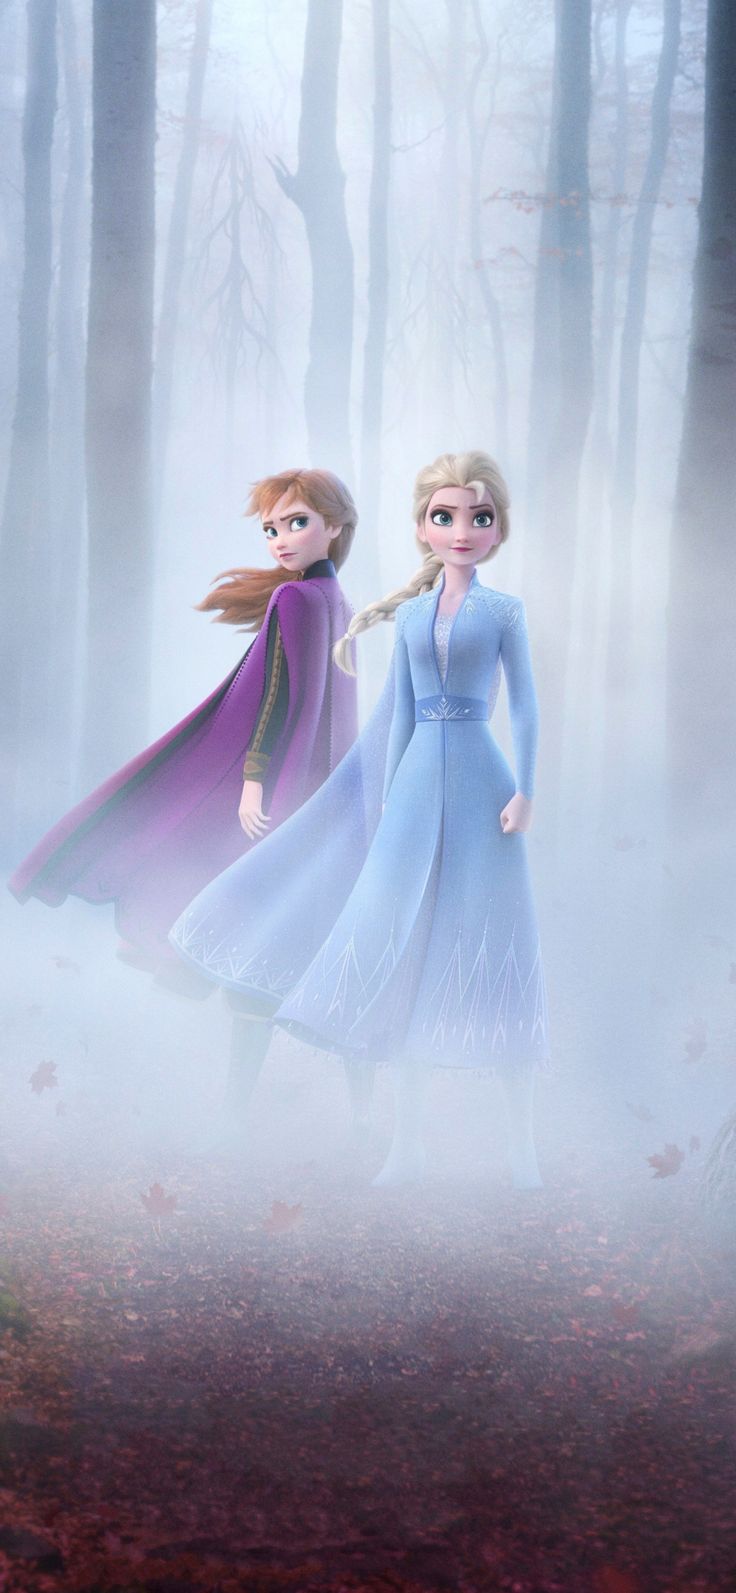 marvelous wallpaper 1125x2436 Frozen Queen Elsa and Anna, movie